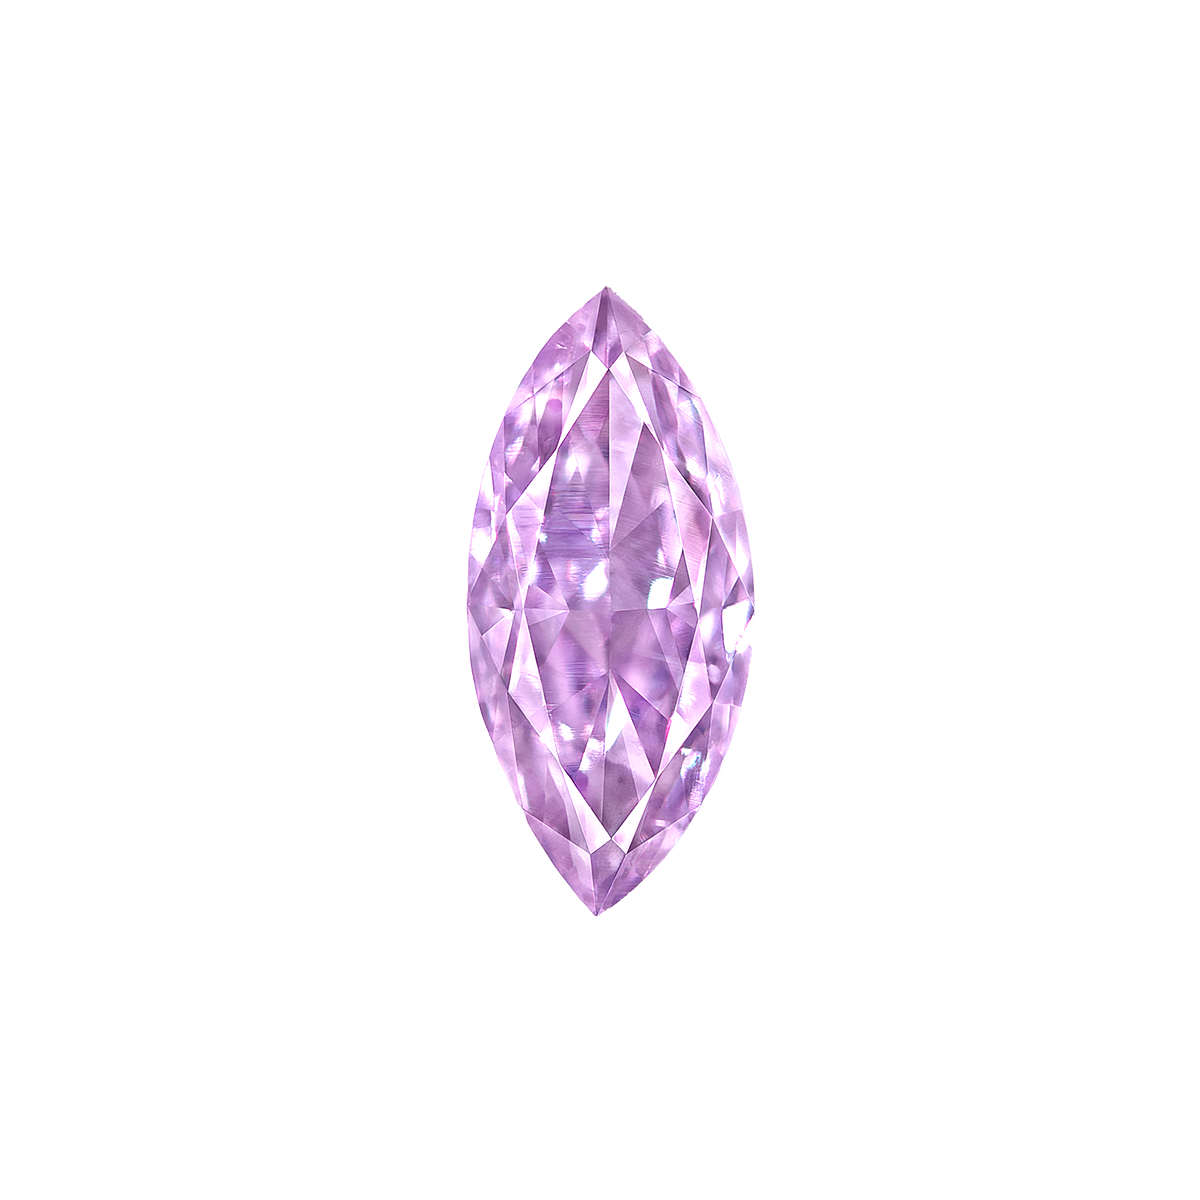 GIA 0.50克拉  粉紫鑽裸石
Fancy Pinkish Purple 
Unmounted Colored Diamond